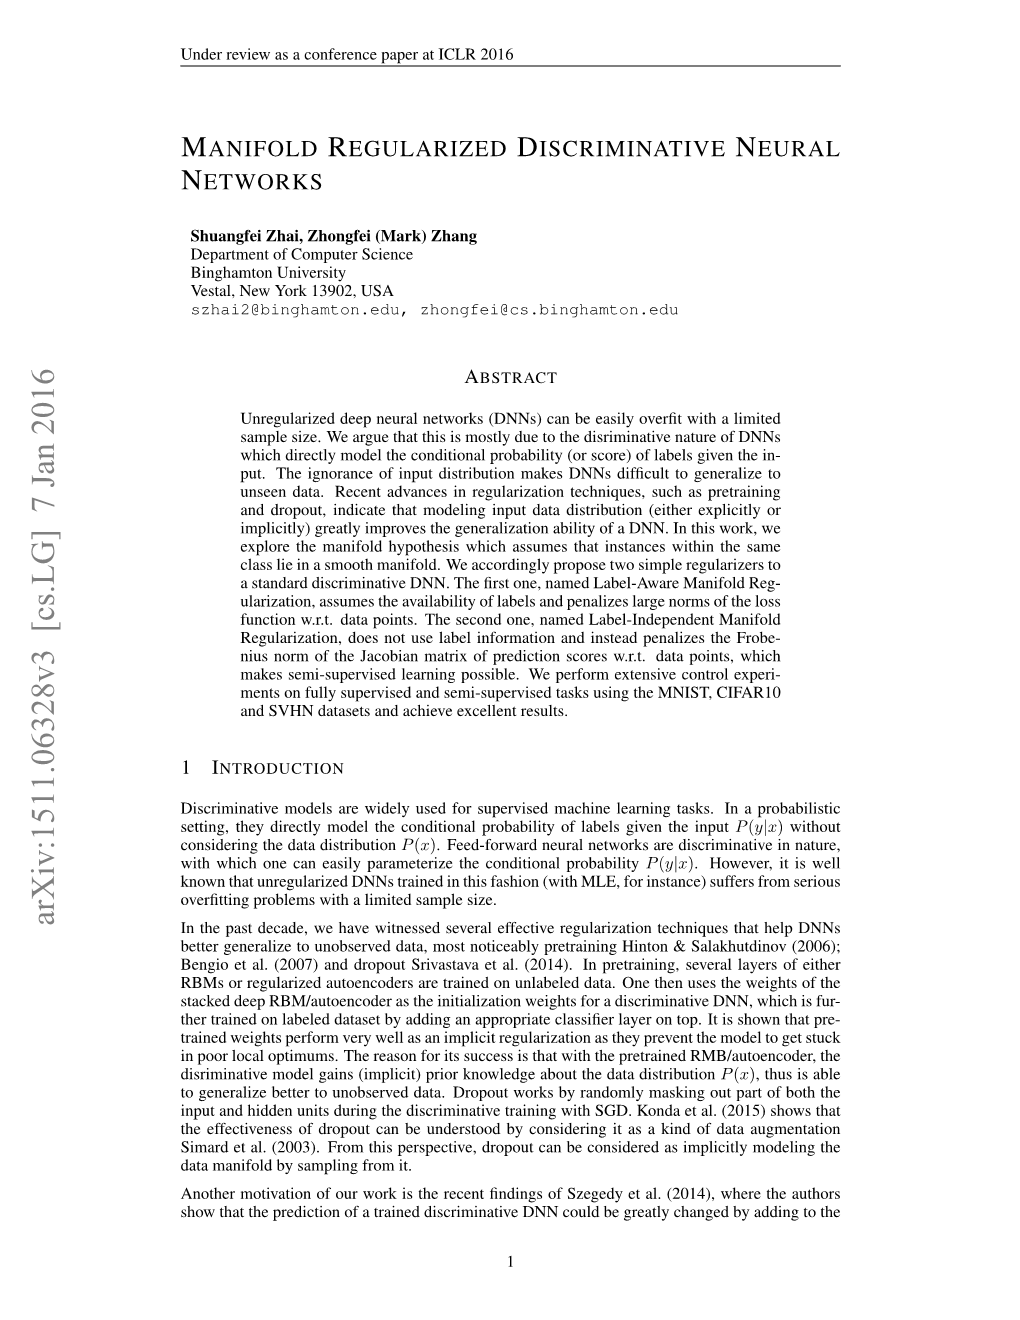 Manifold Regularized Discriminative Neural Networks